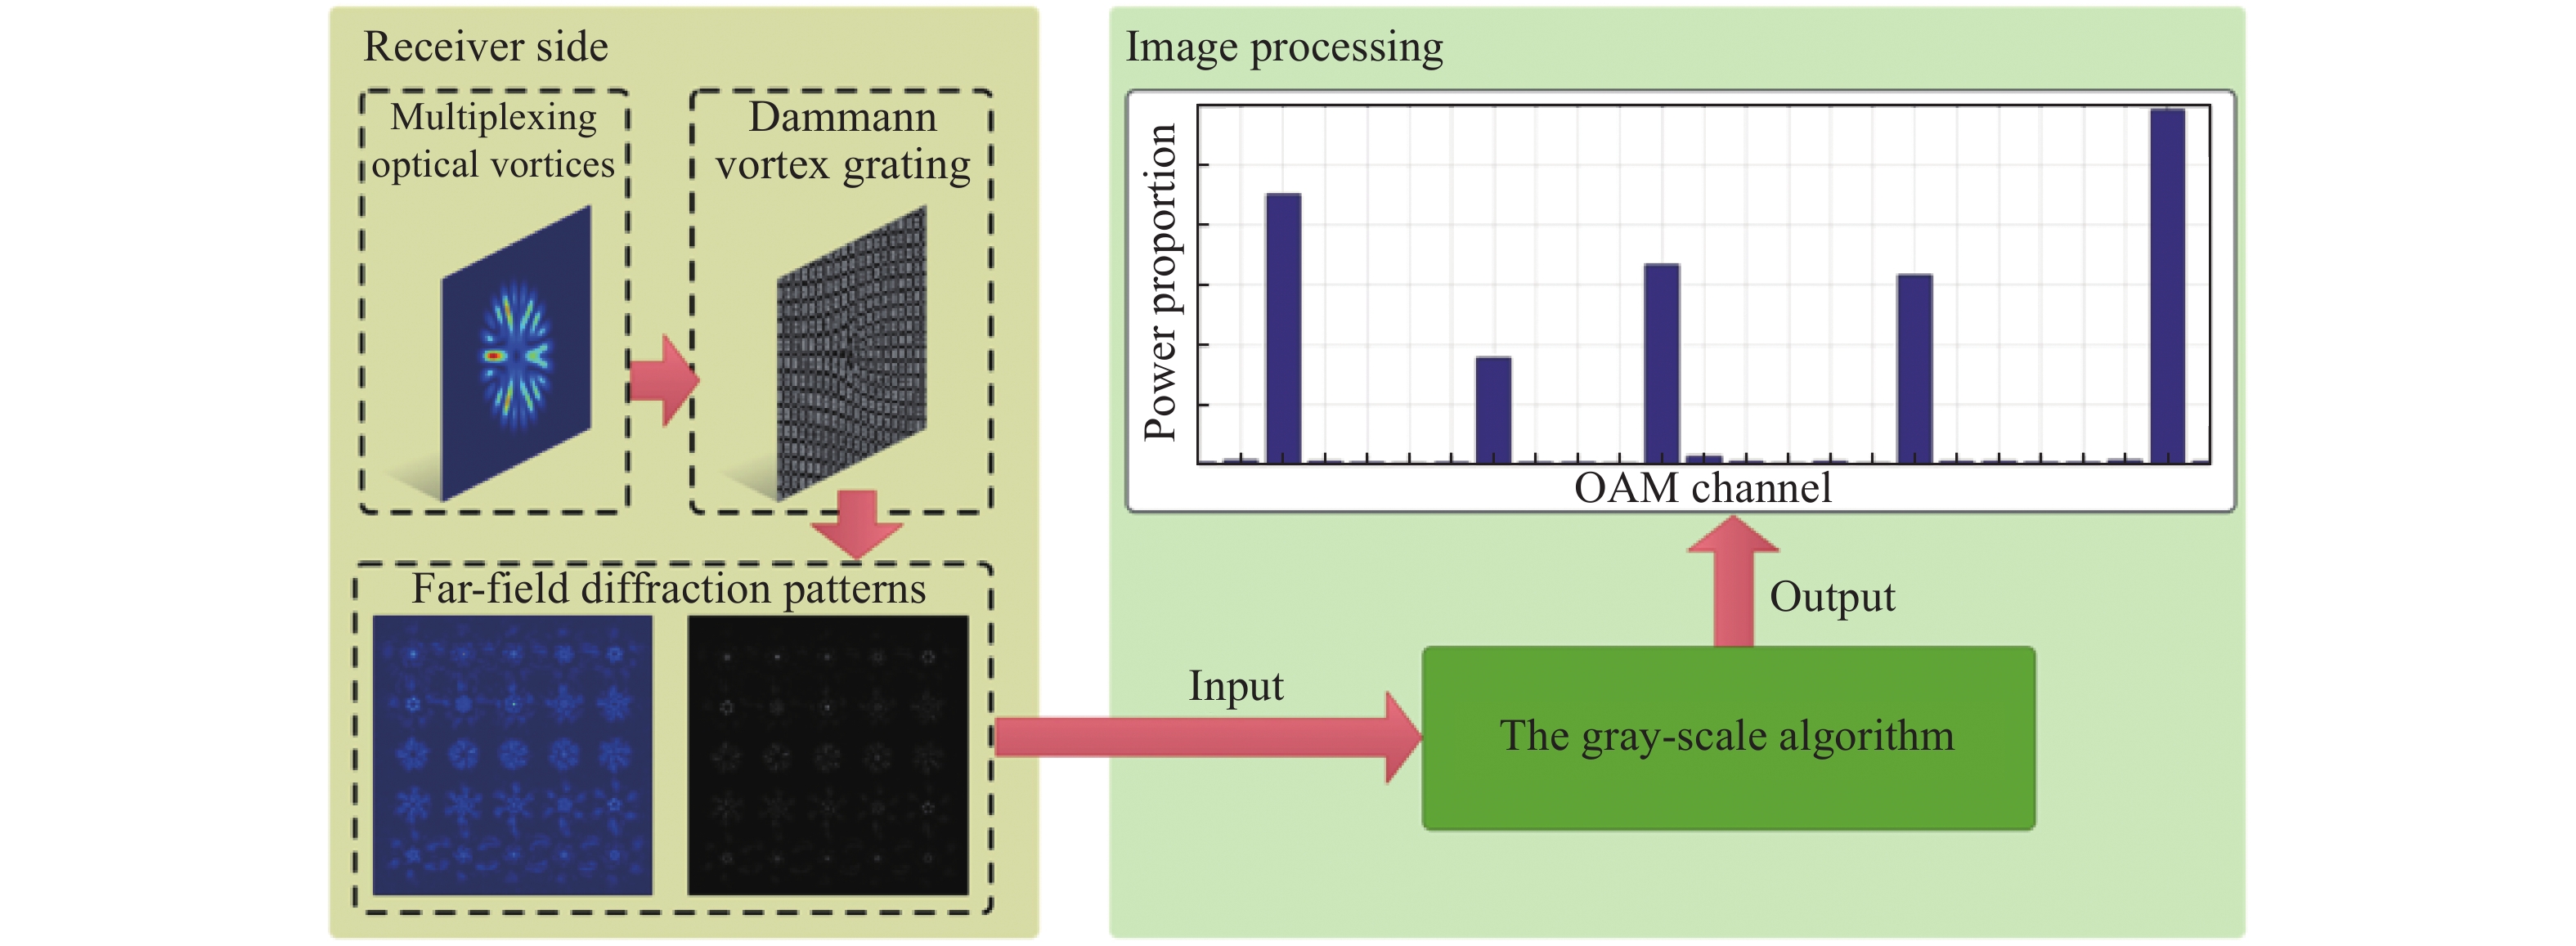 OAM spectrum measurement through gray-scale algorithm associated with a Dammann vortex grating[69]